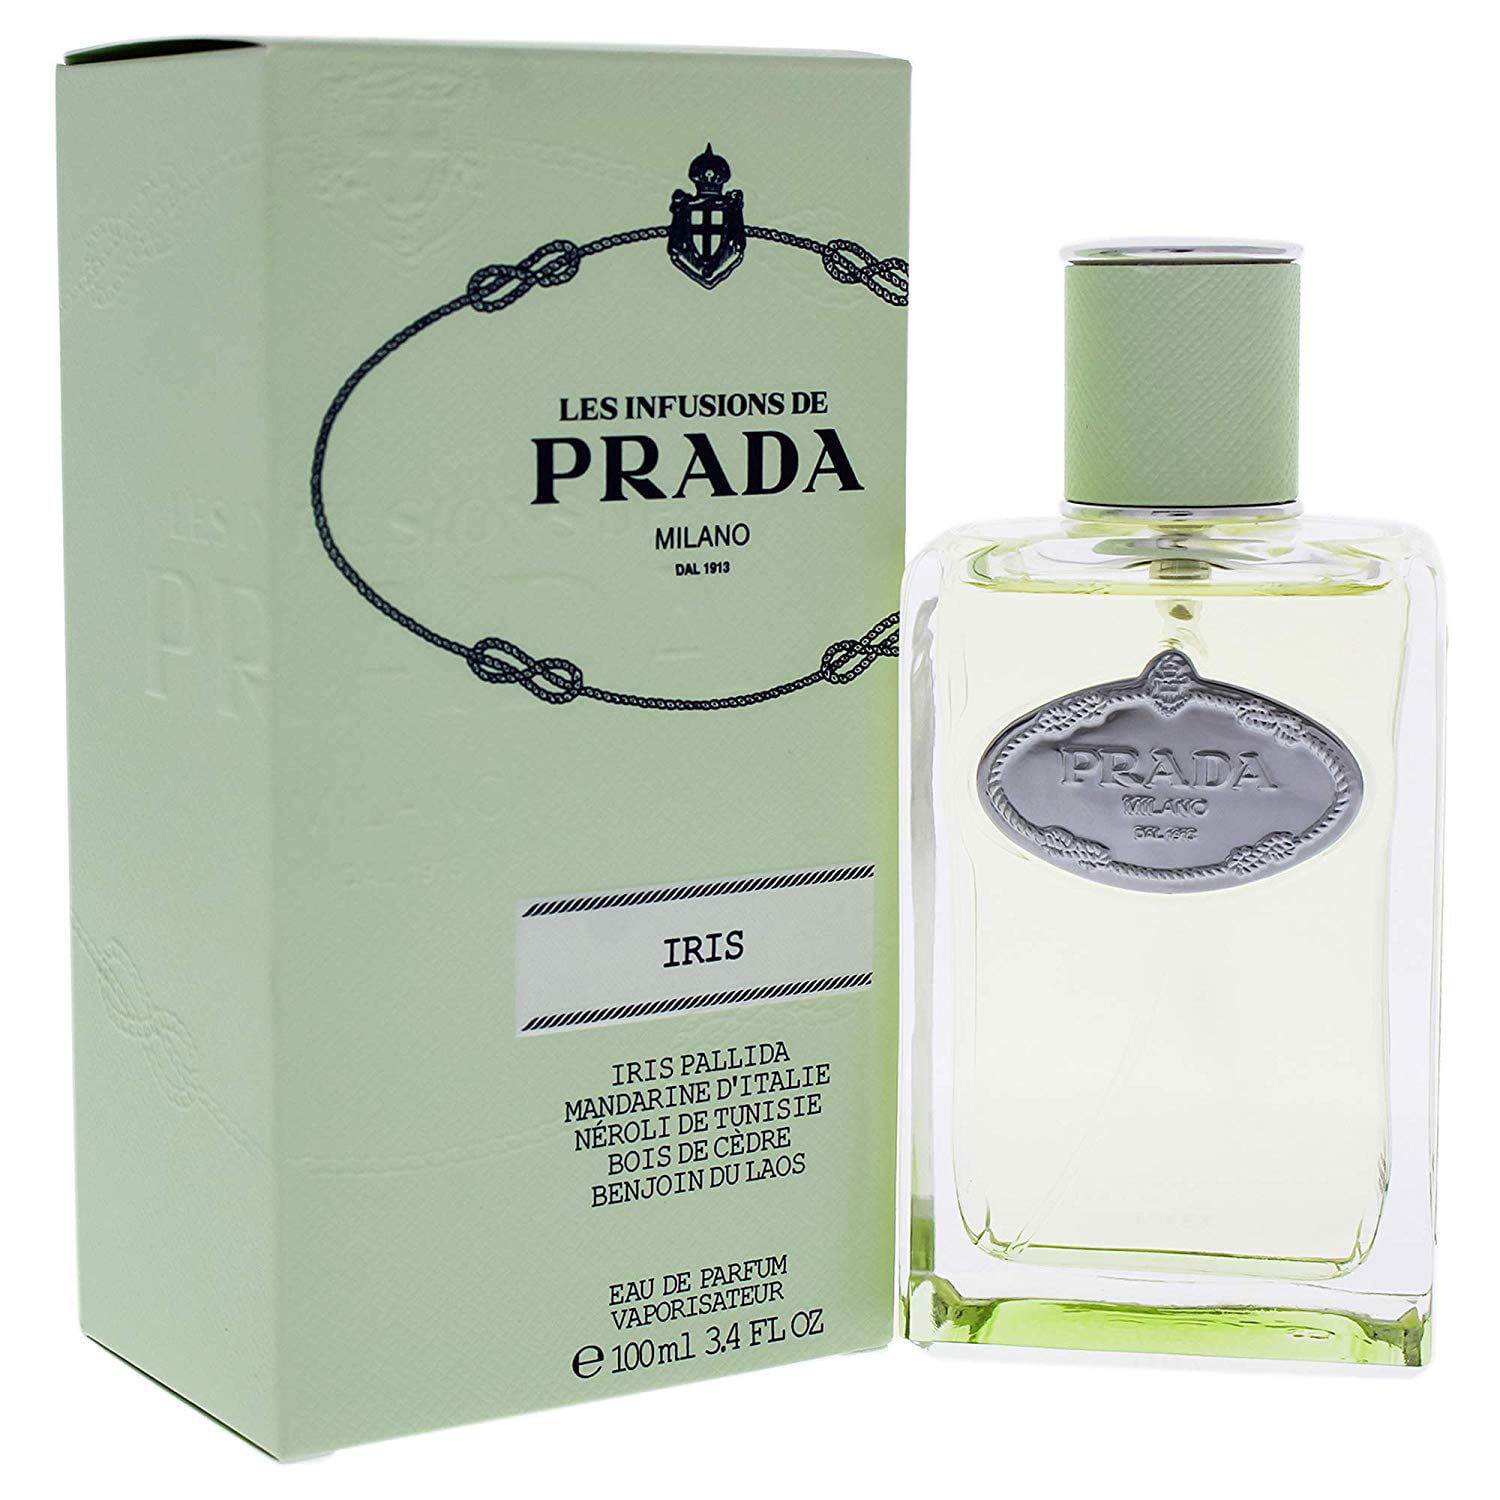 perfume infusion d iris prada